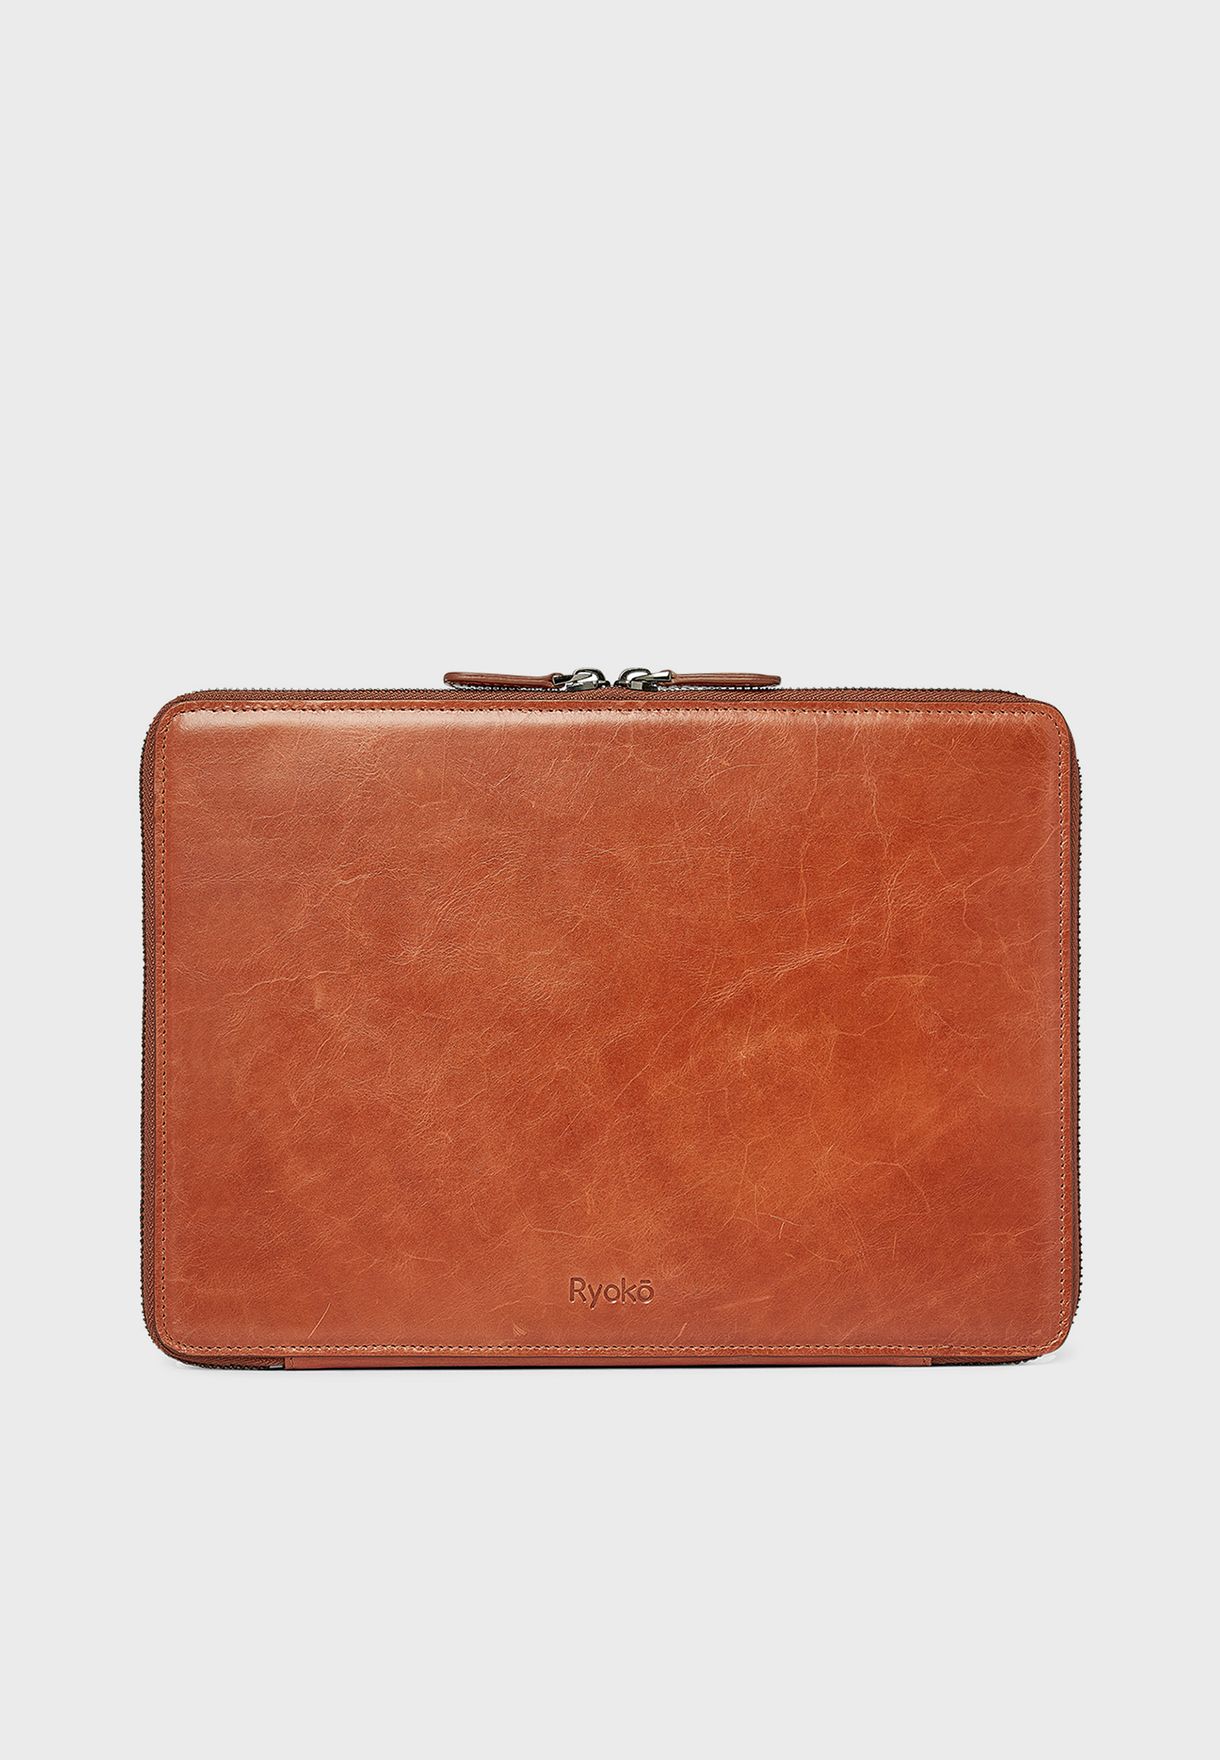 13' Mark Tech Portfolio Leather Case